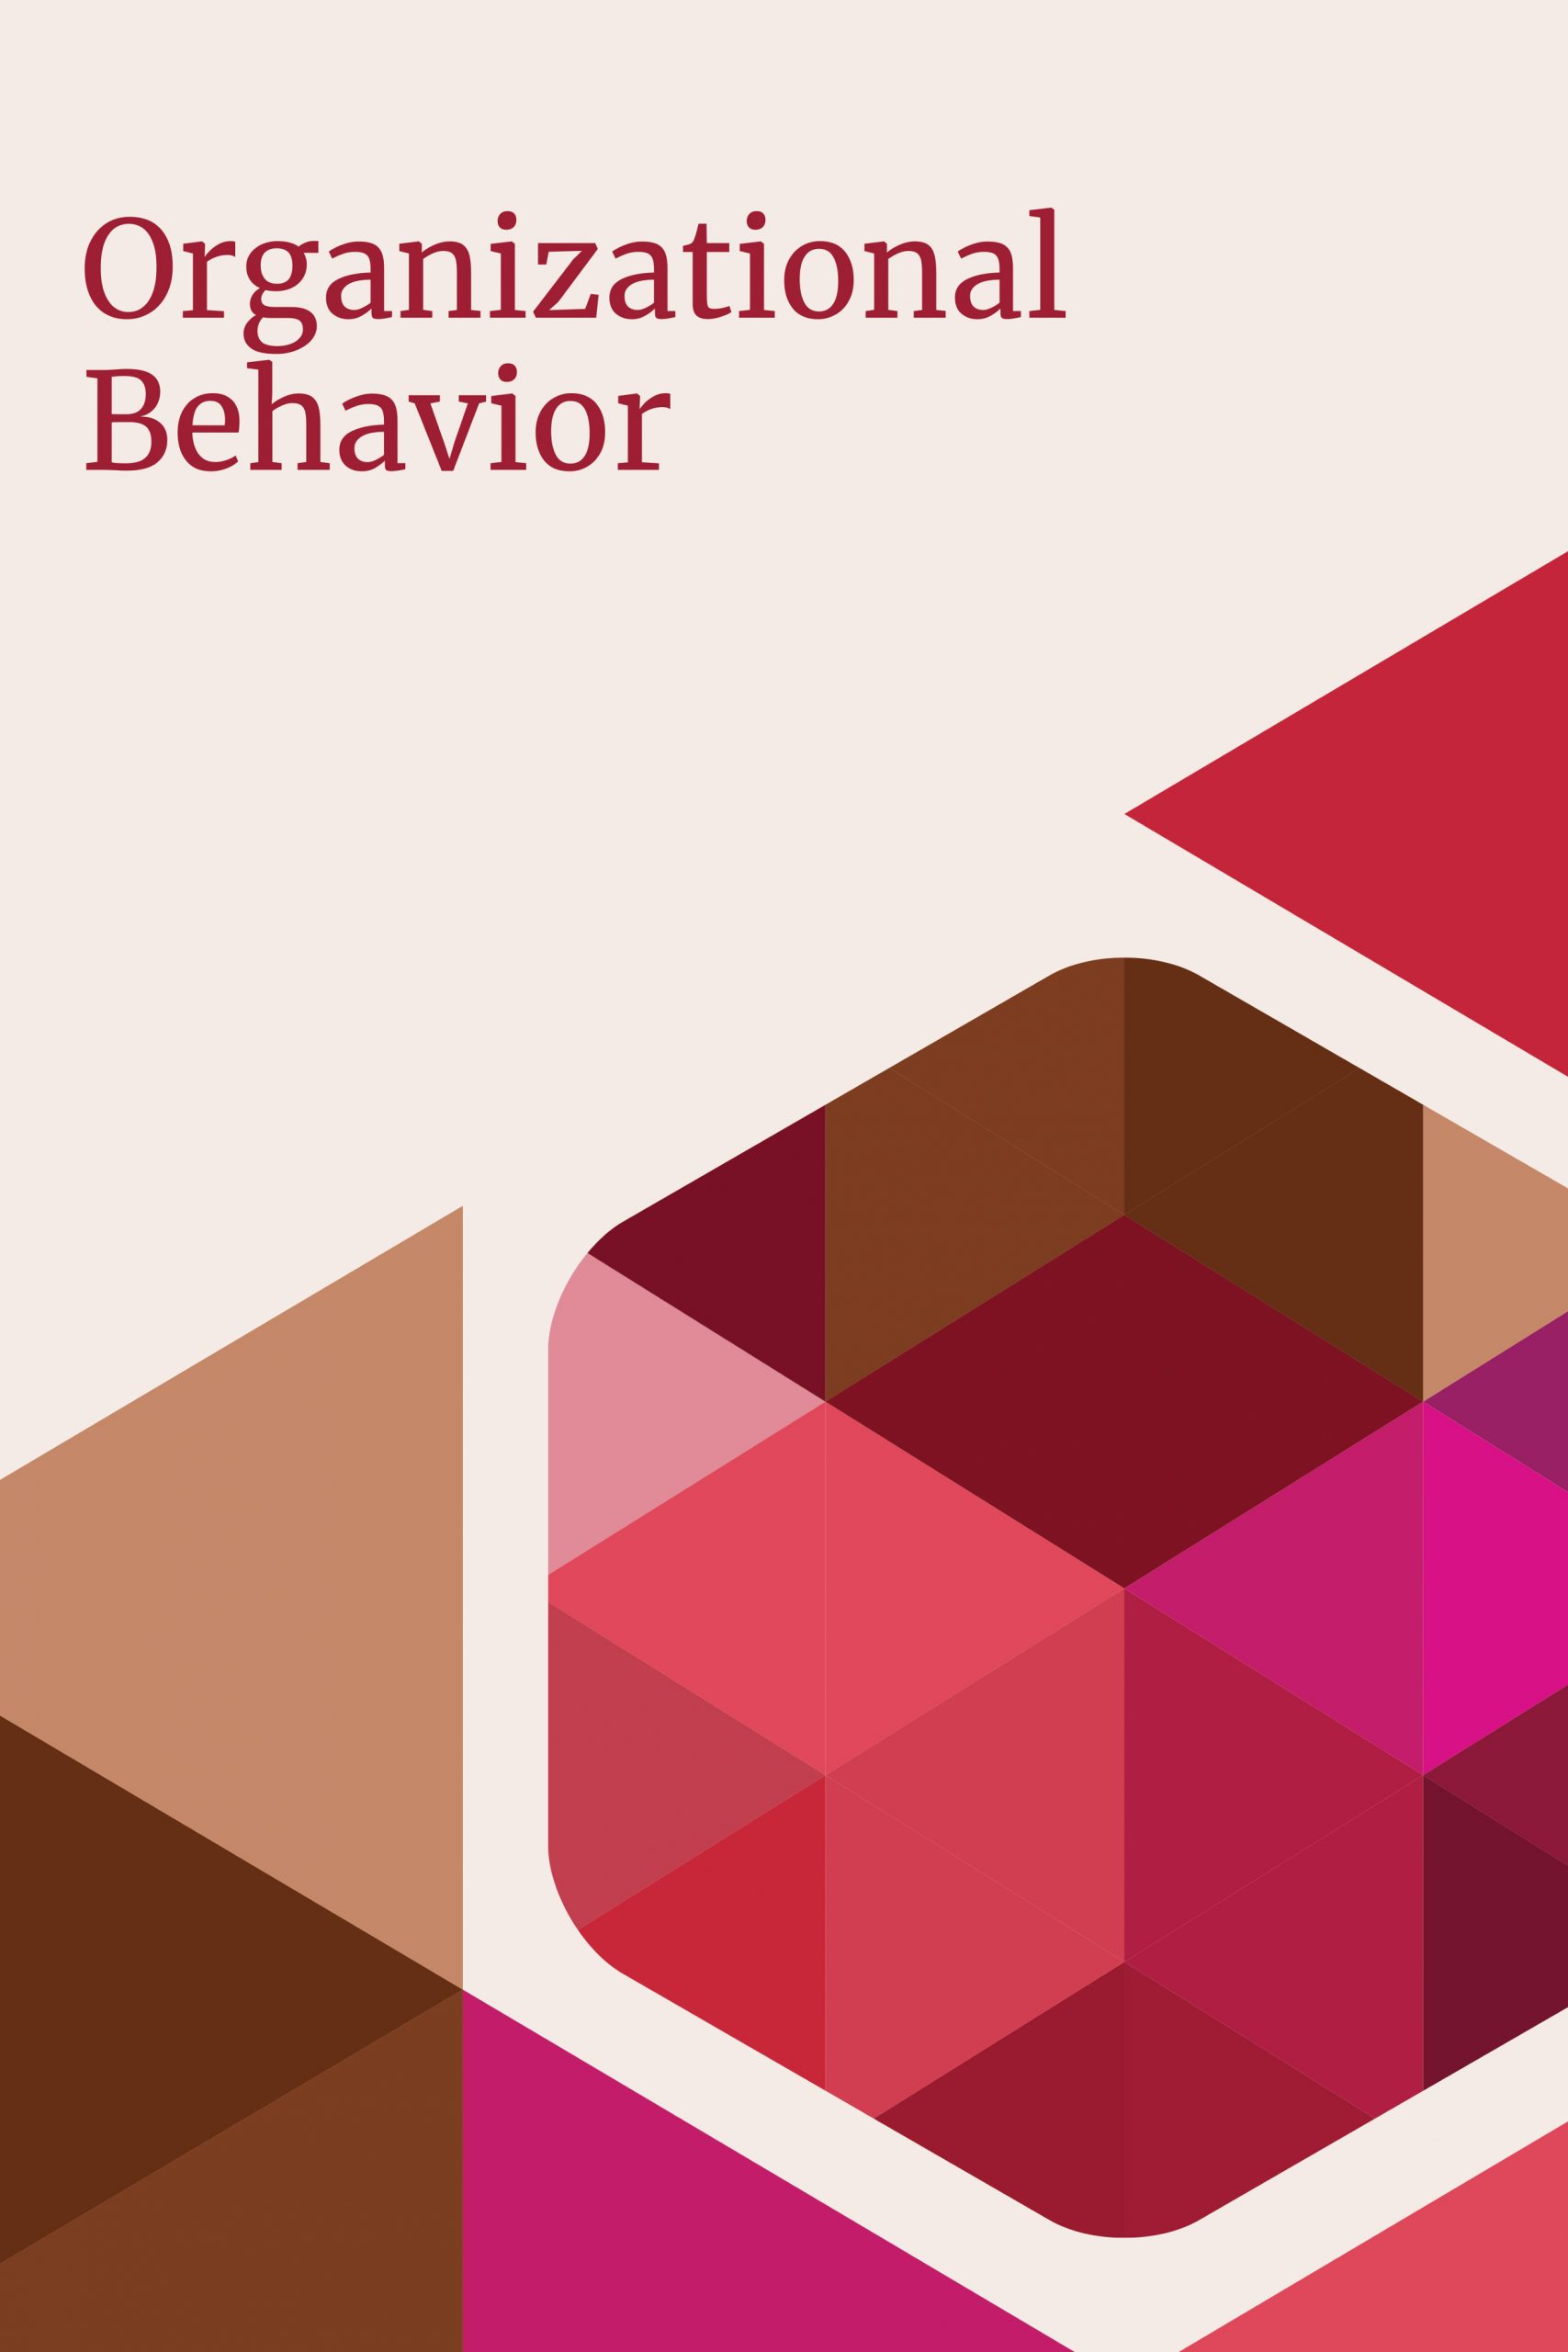 organization behavior literature review